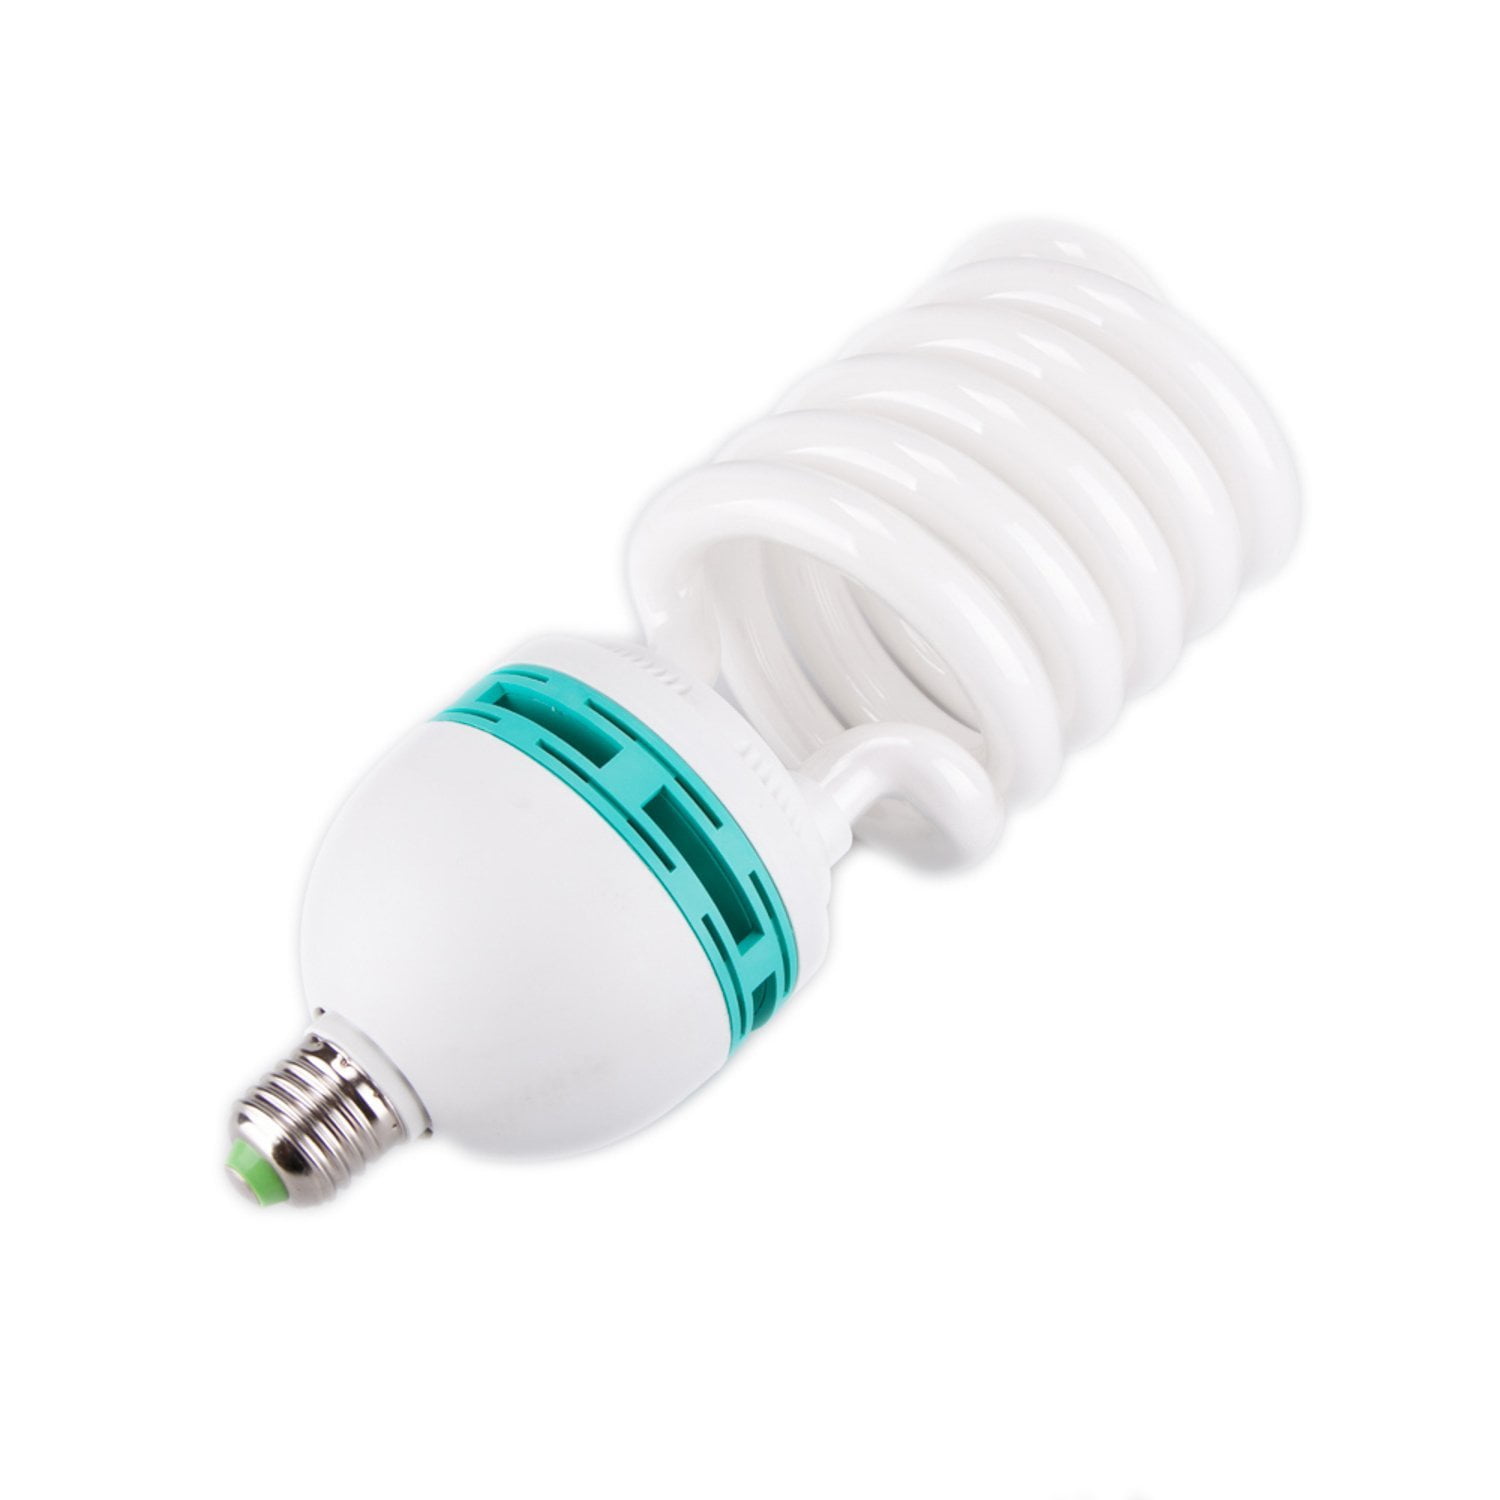 Designers Edge L765 65-Watt Fluorescent Bulb Replacement 